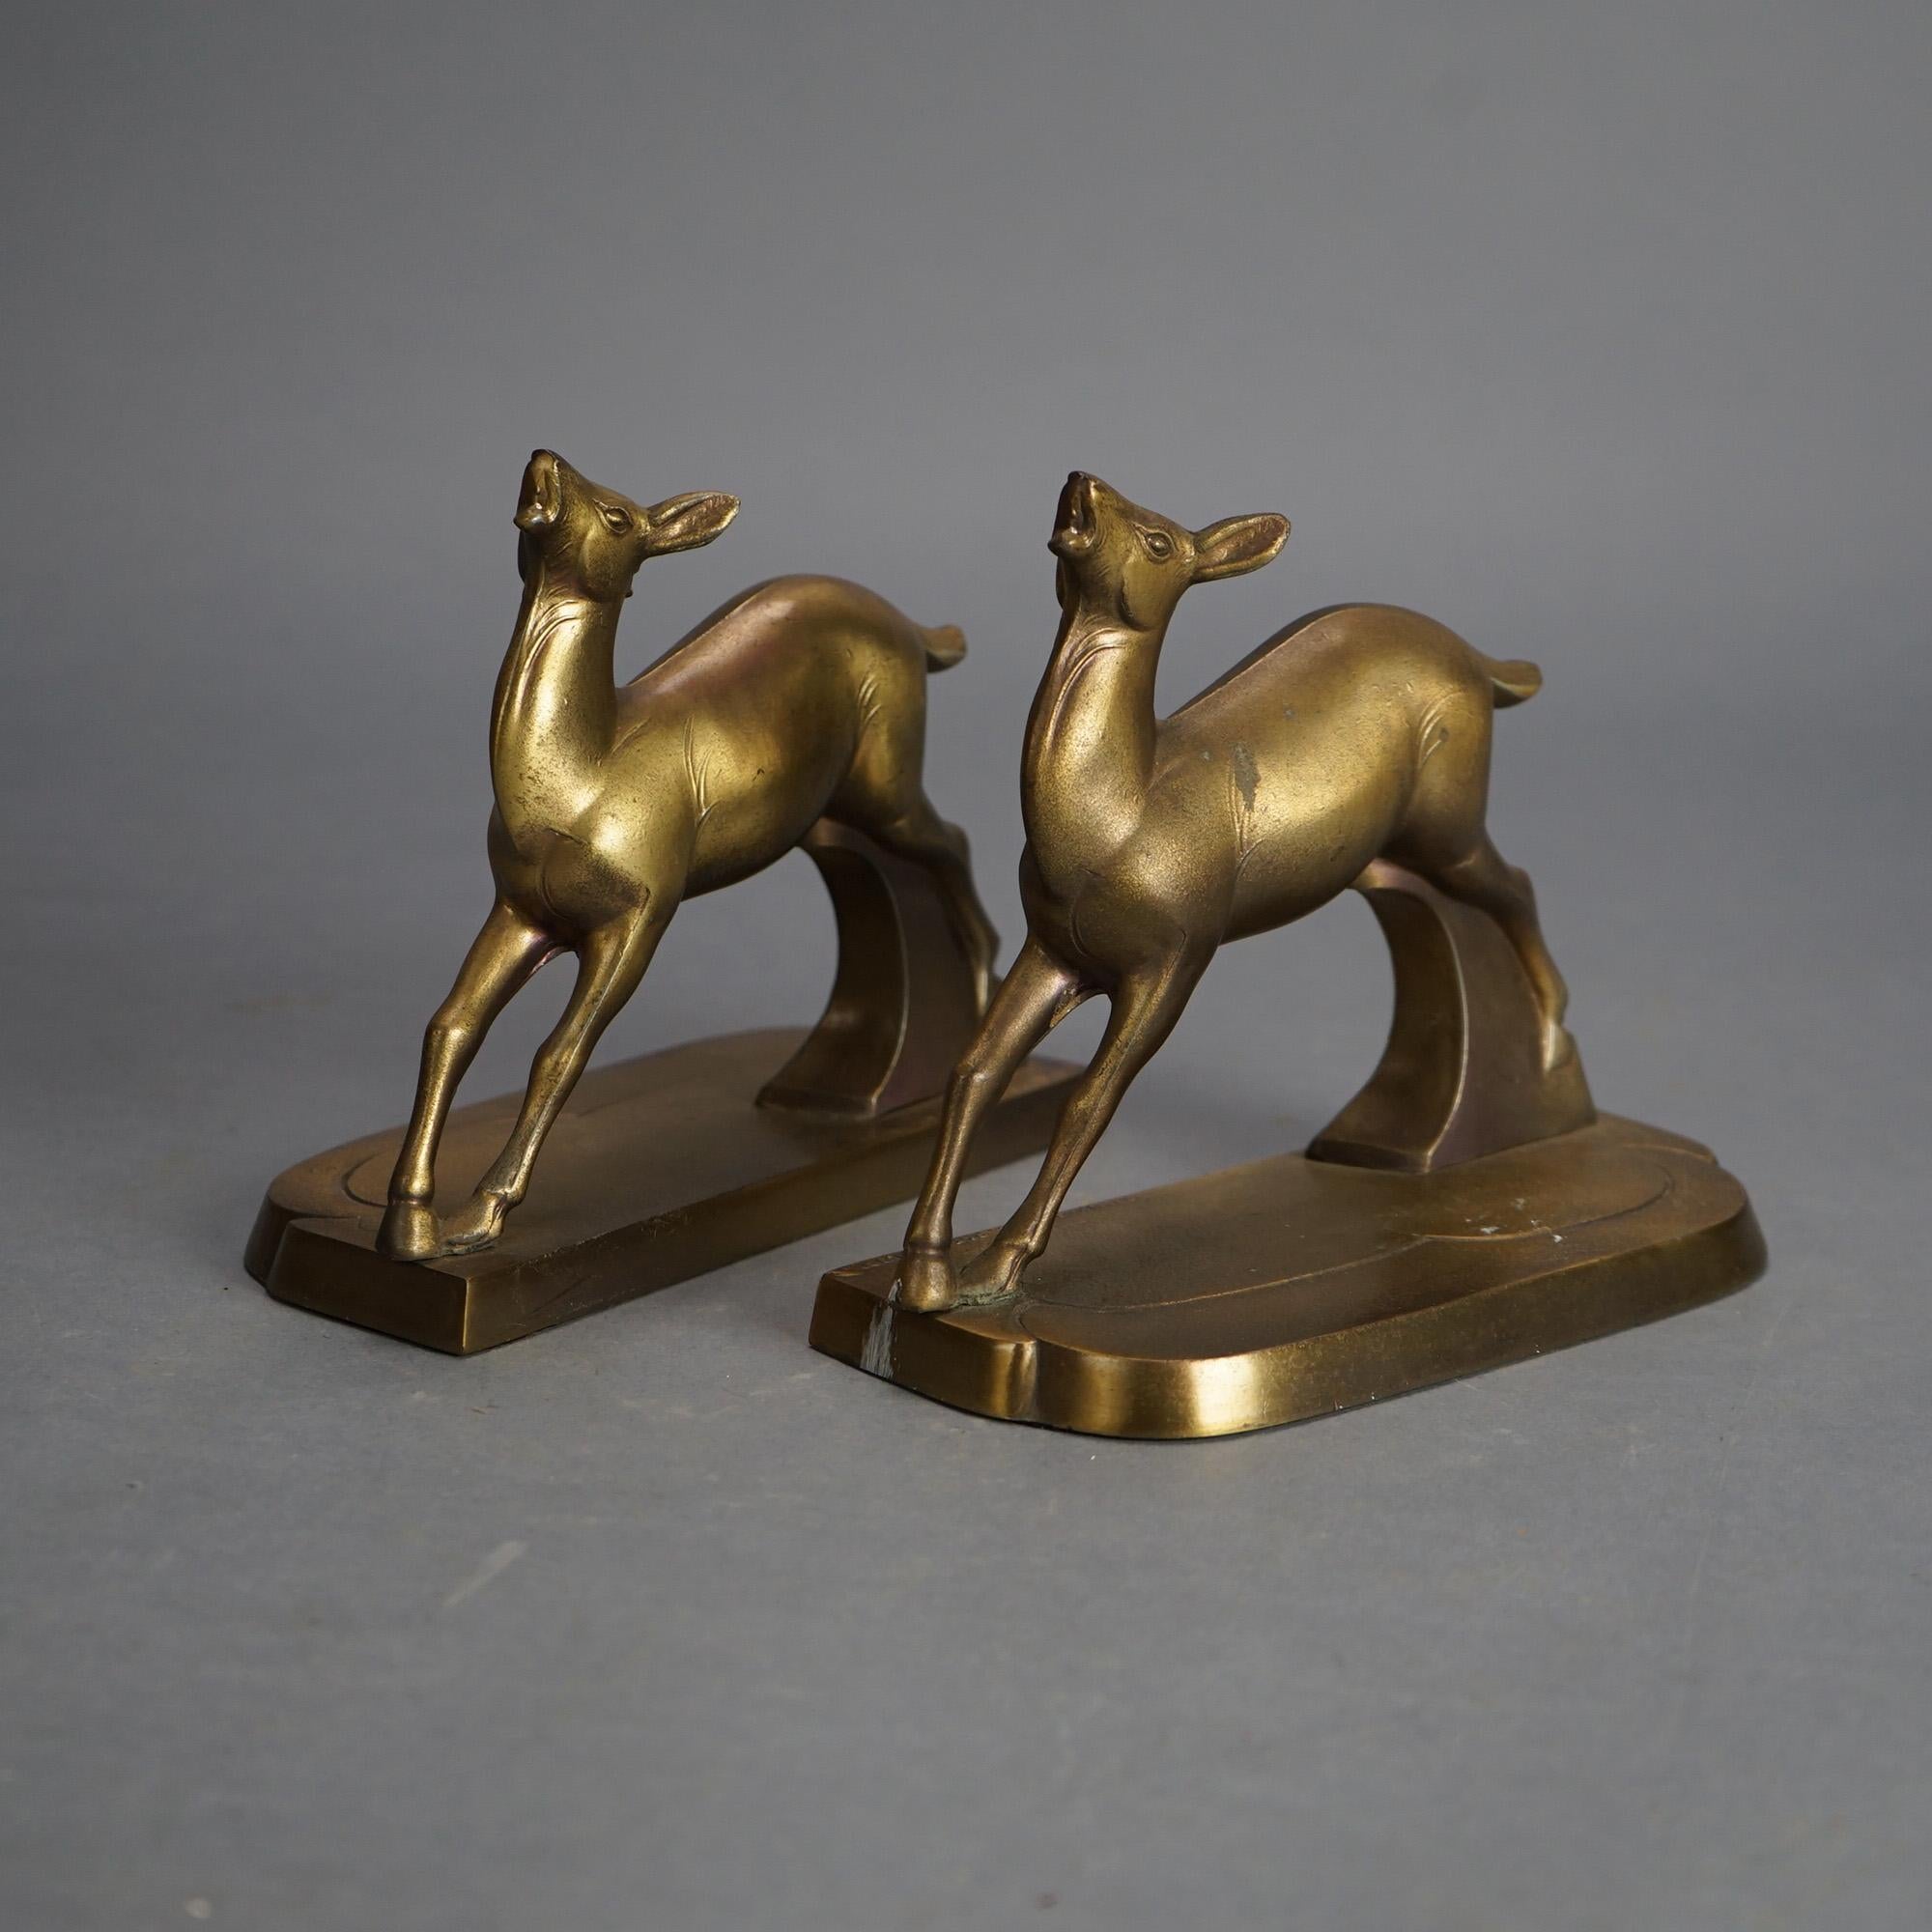 Antique Frankart Art Deco Gilt Cast Metal Figural Deer Bookends C1930

Measures - 6.5